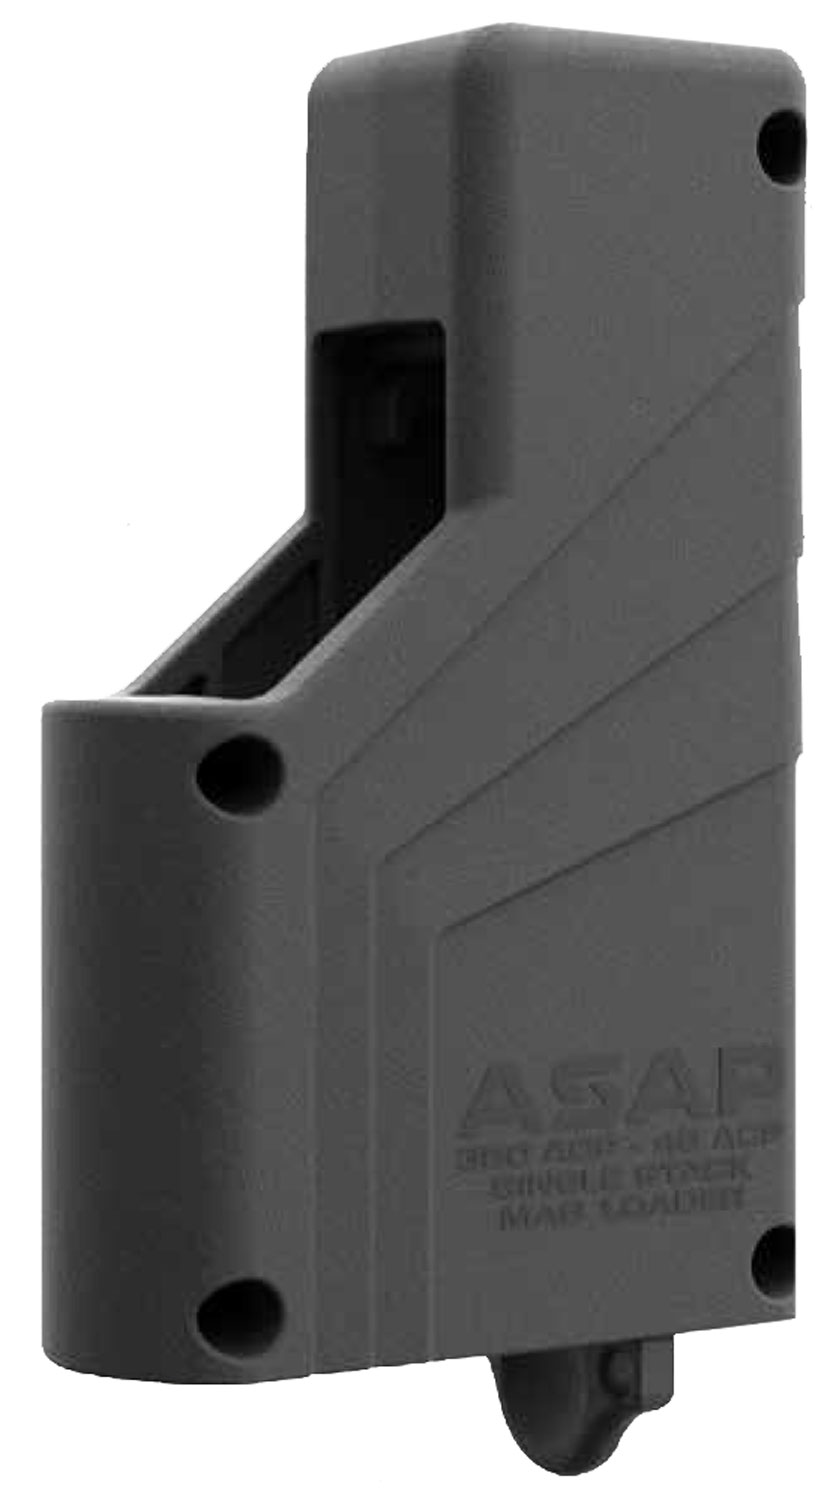 Butler Creek BCA1XSML ASAP Universal Mag Loader Single Stack Style Black Polymer Fits 9mm - 45 ACP Caliber Pistols  | 9x19mm NATO | 051525000228